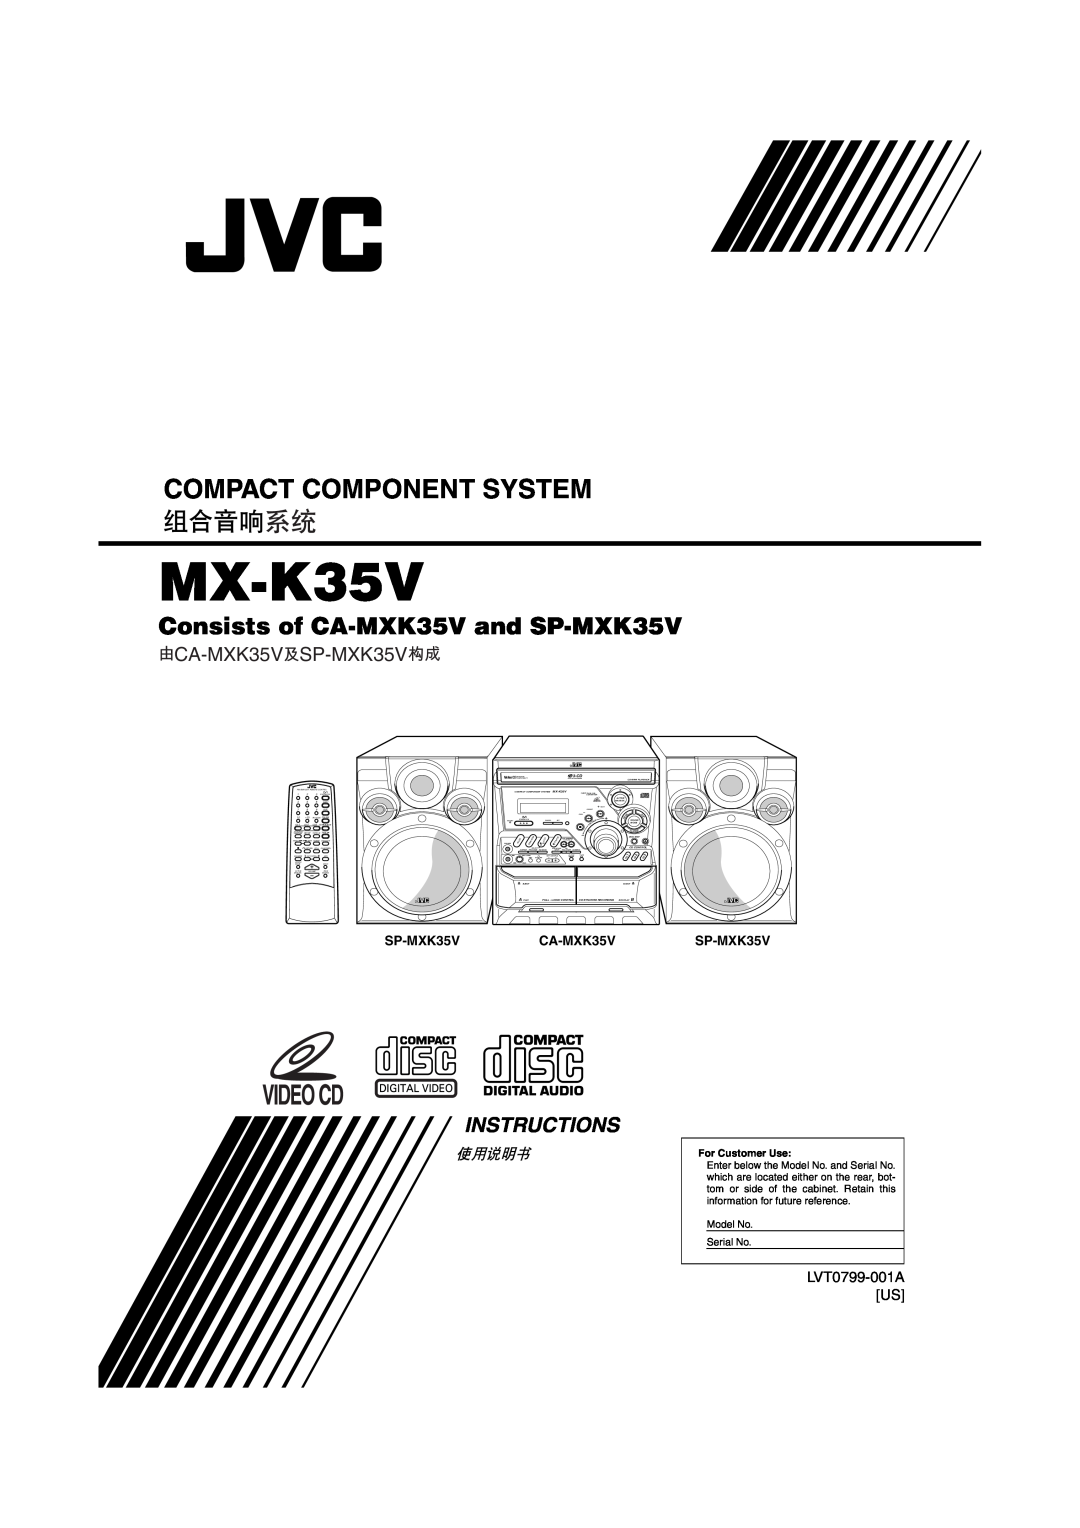 JVC MX-K35V manual Instructions, Compact Component System, Consists of CA-MXK35Vand SP-MXK35V, CA-MXK35VSP-MXK35V, Ssic 